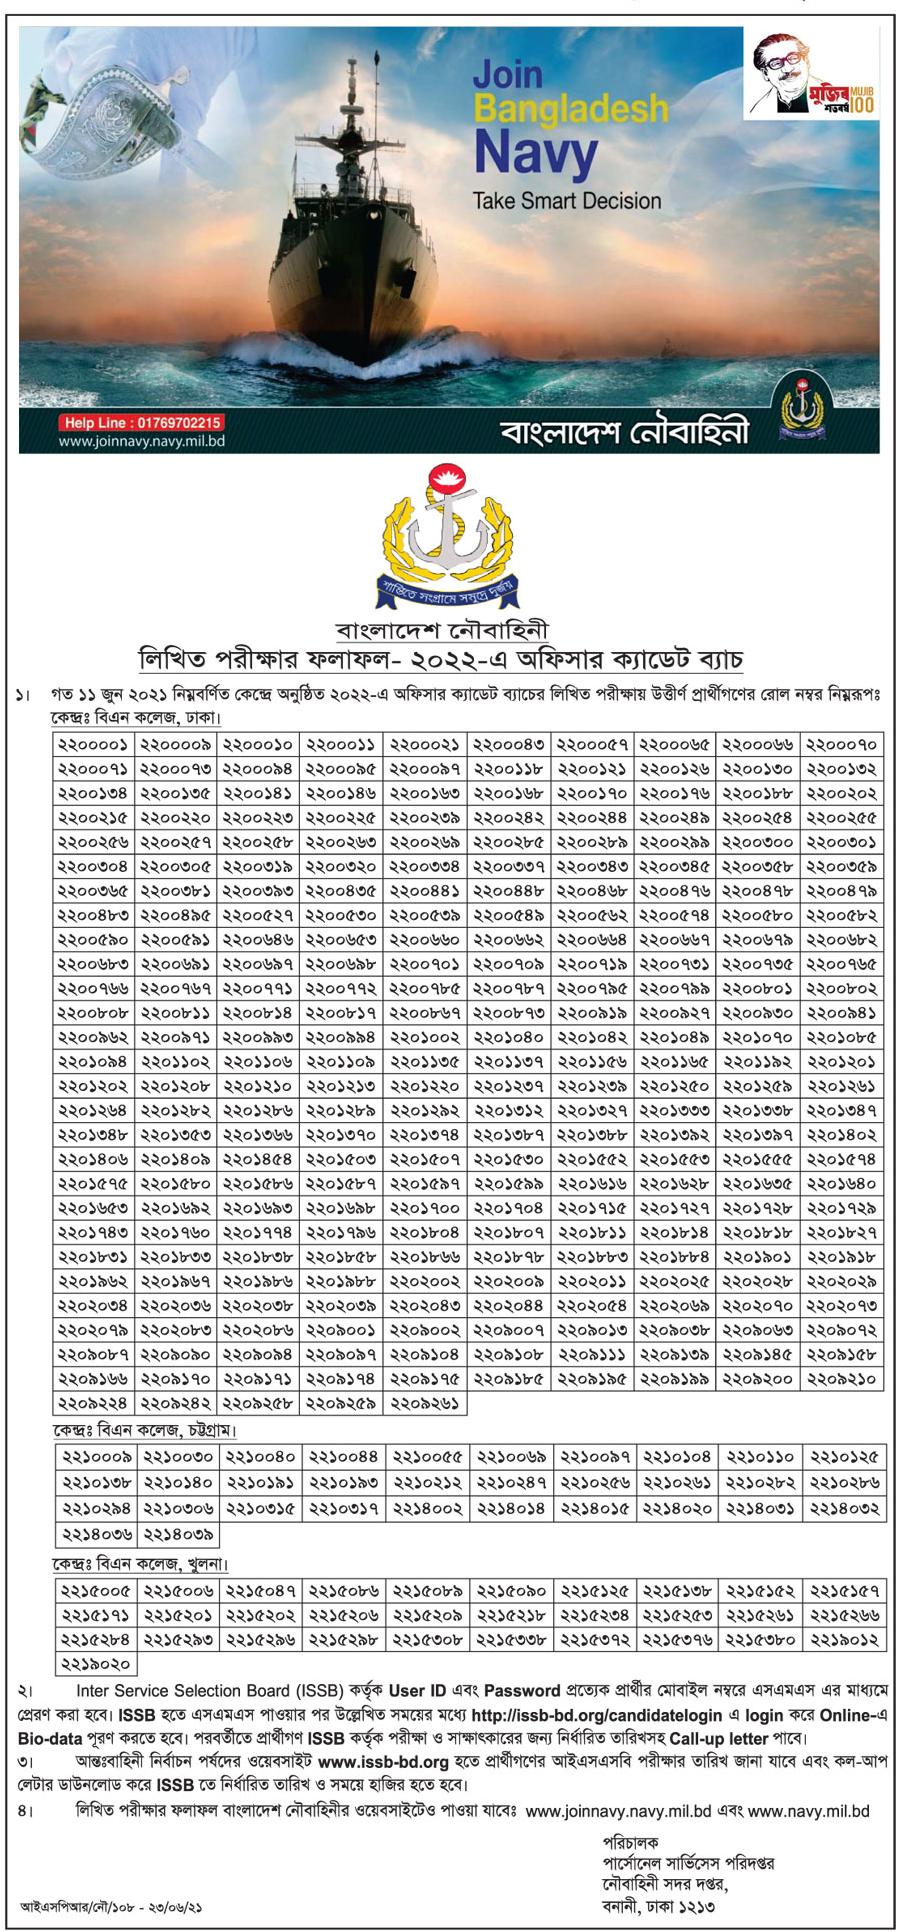 Bangladesh Navy job Exam result published 2021 www.navy.mil.gov.bd